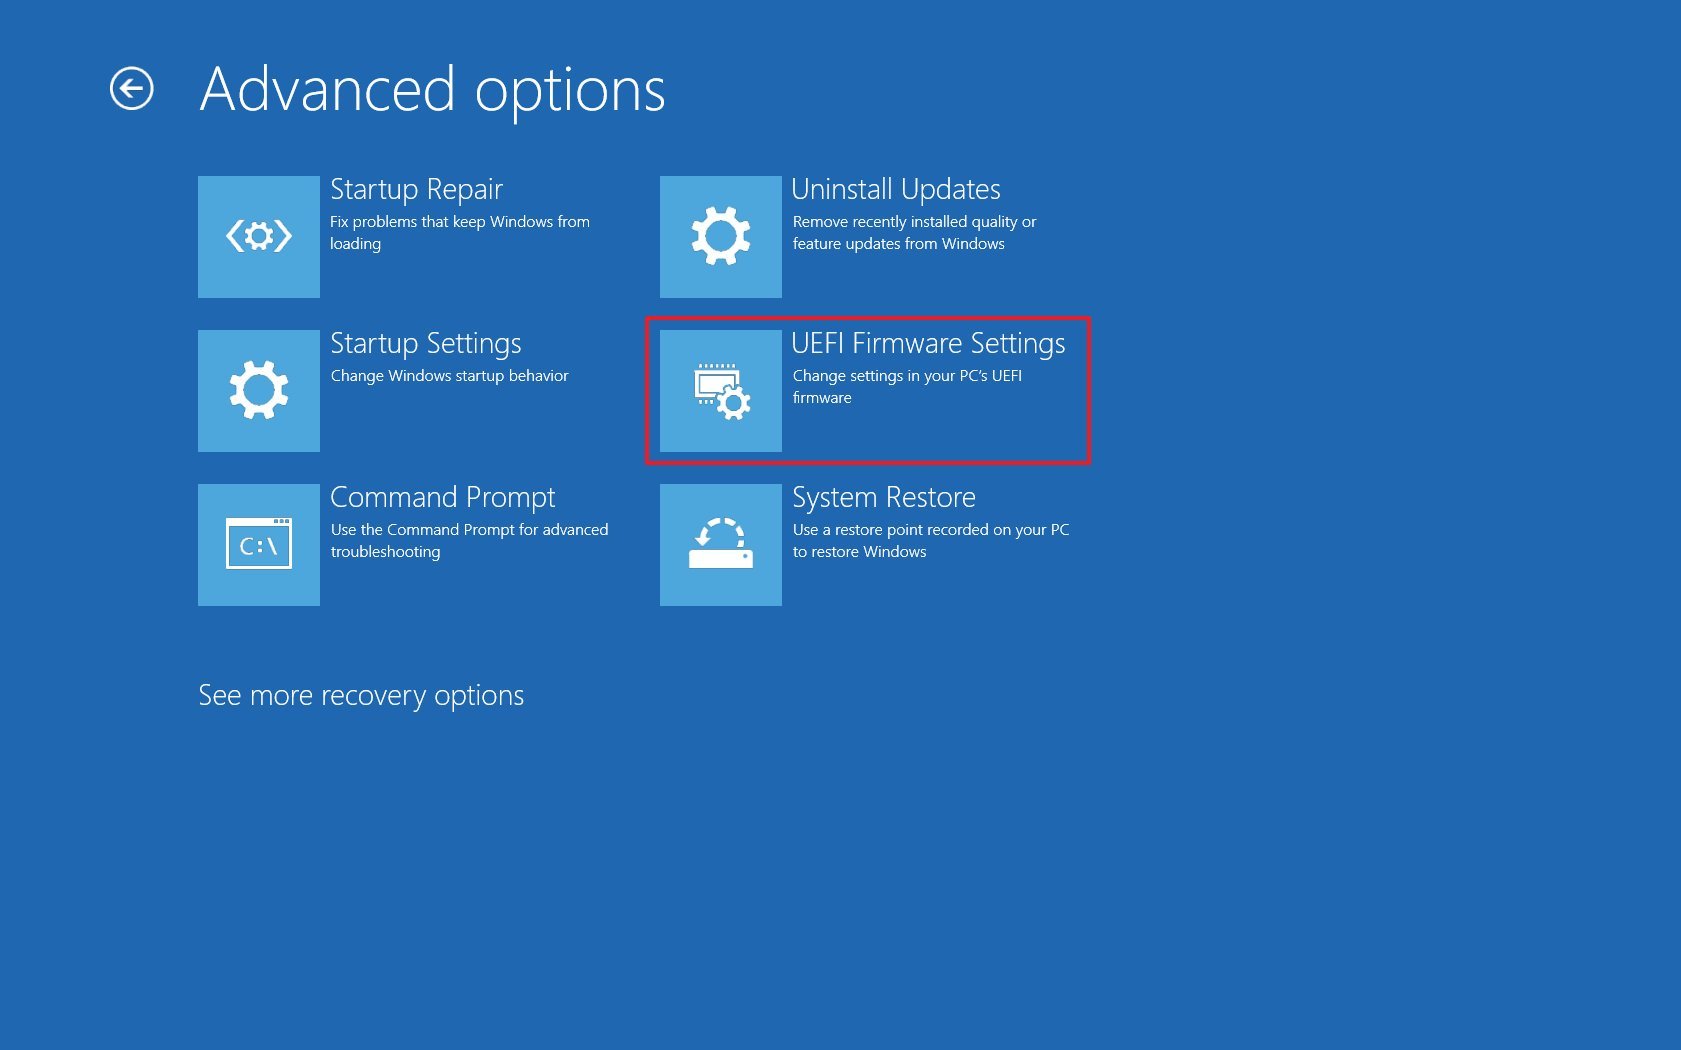 Windows 10 UEFI firmware settings option 